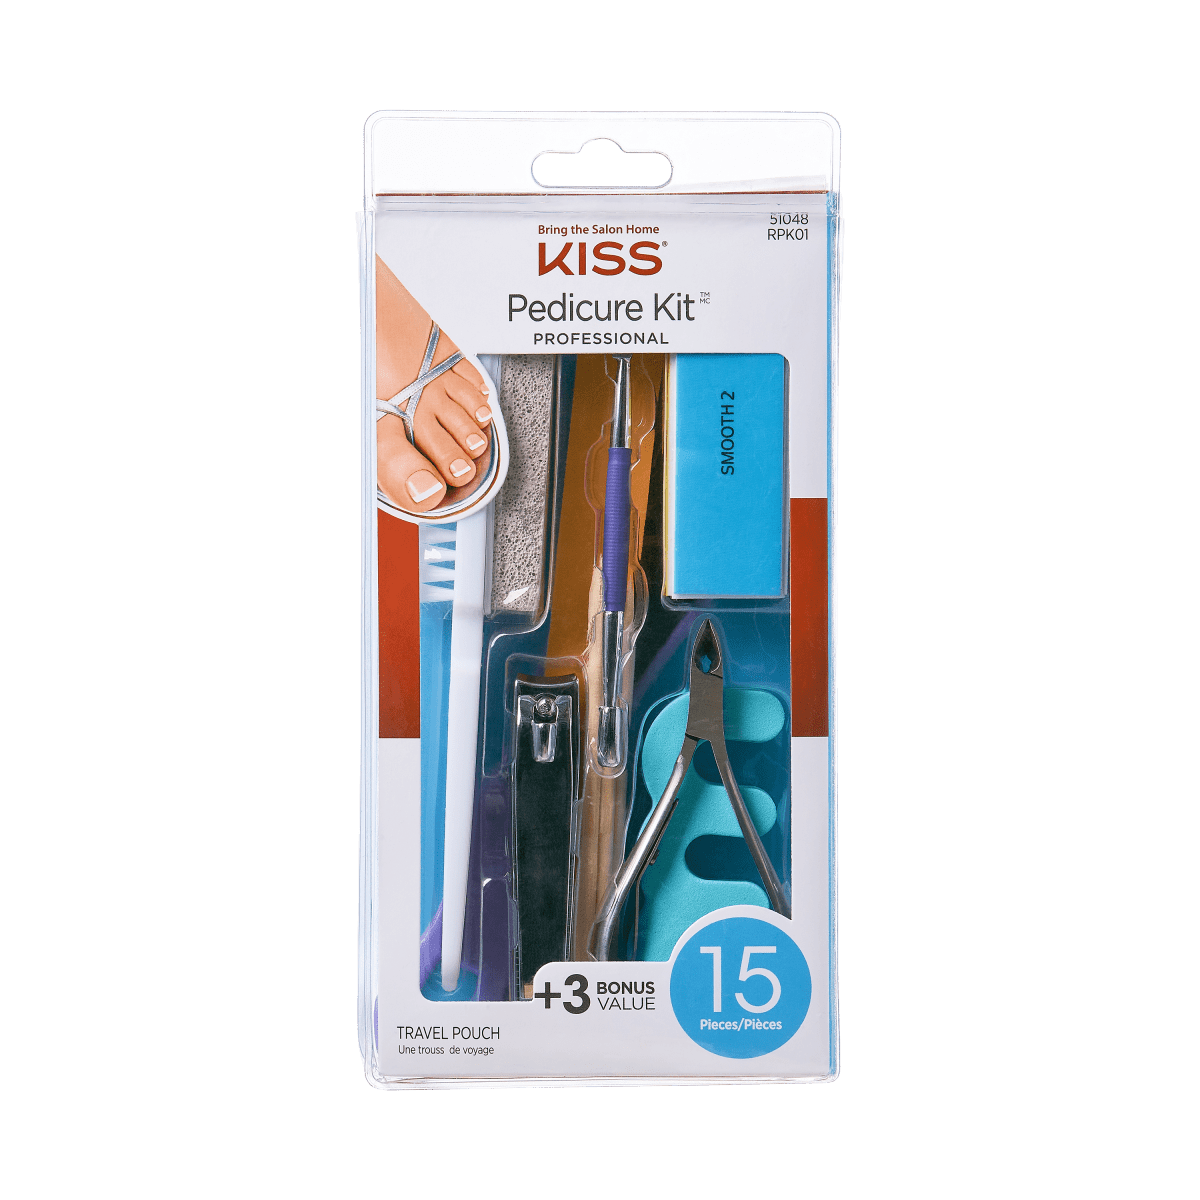 KISS Professional Pedicure Kit